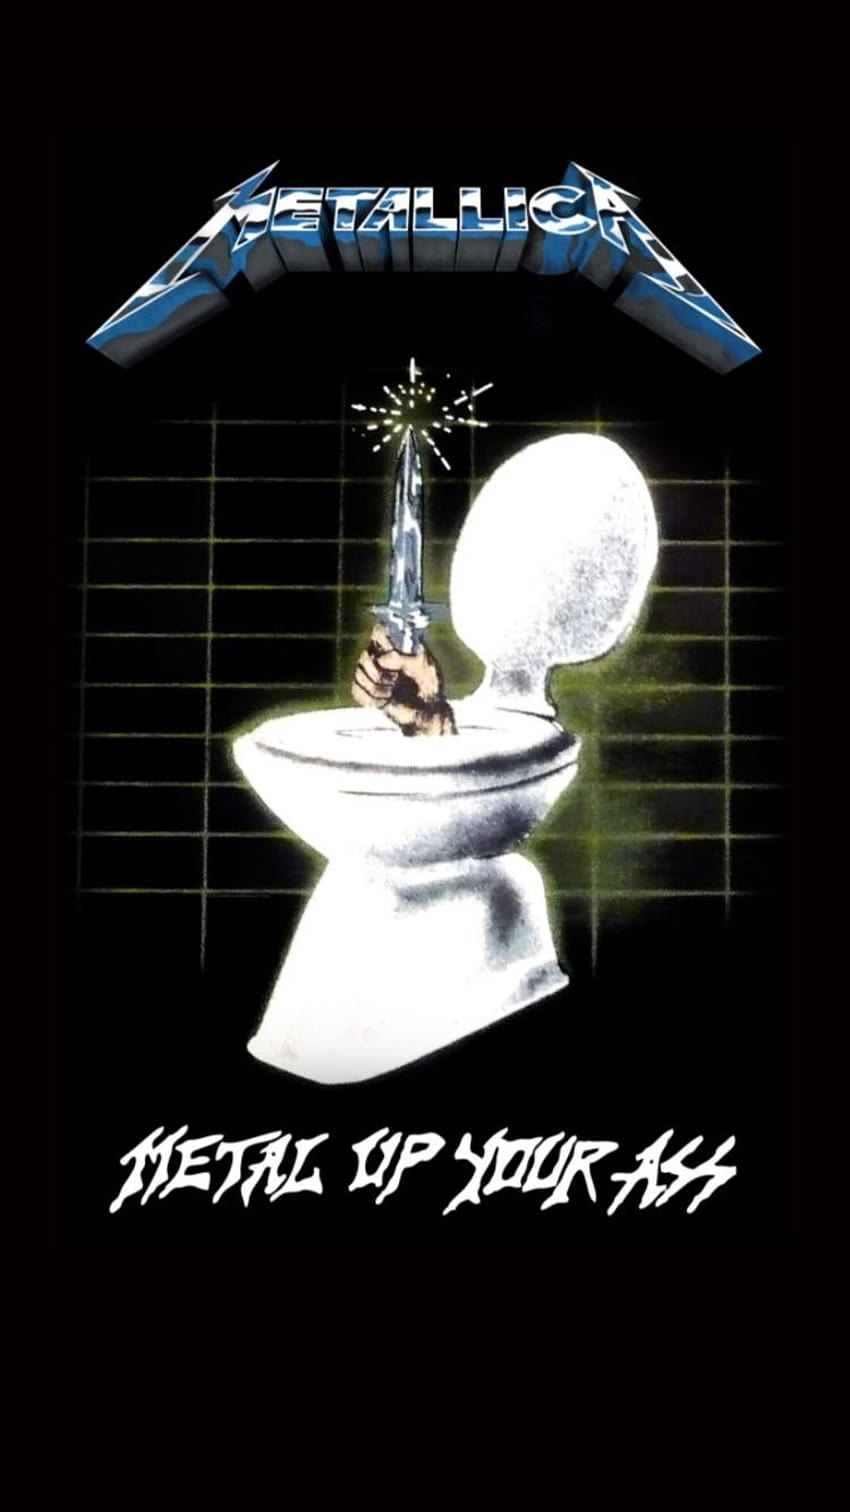 Metal Phone Wallpapers  Android 1080x1920  Metallica album covers  Metallica Metallica albums